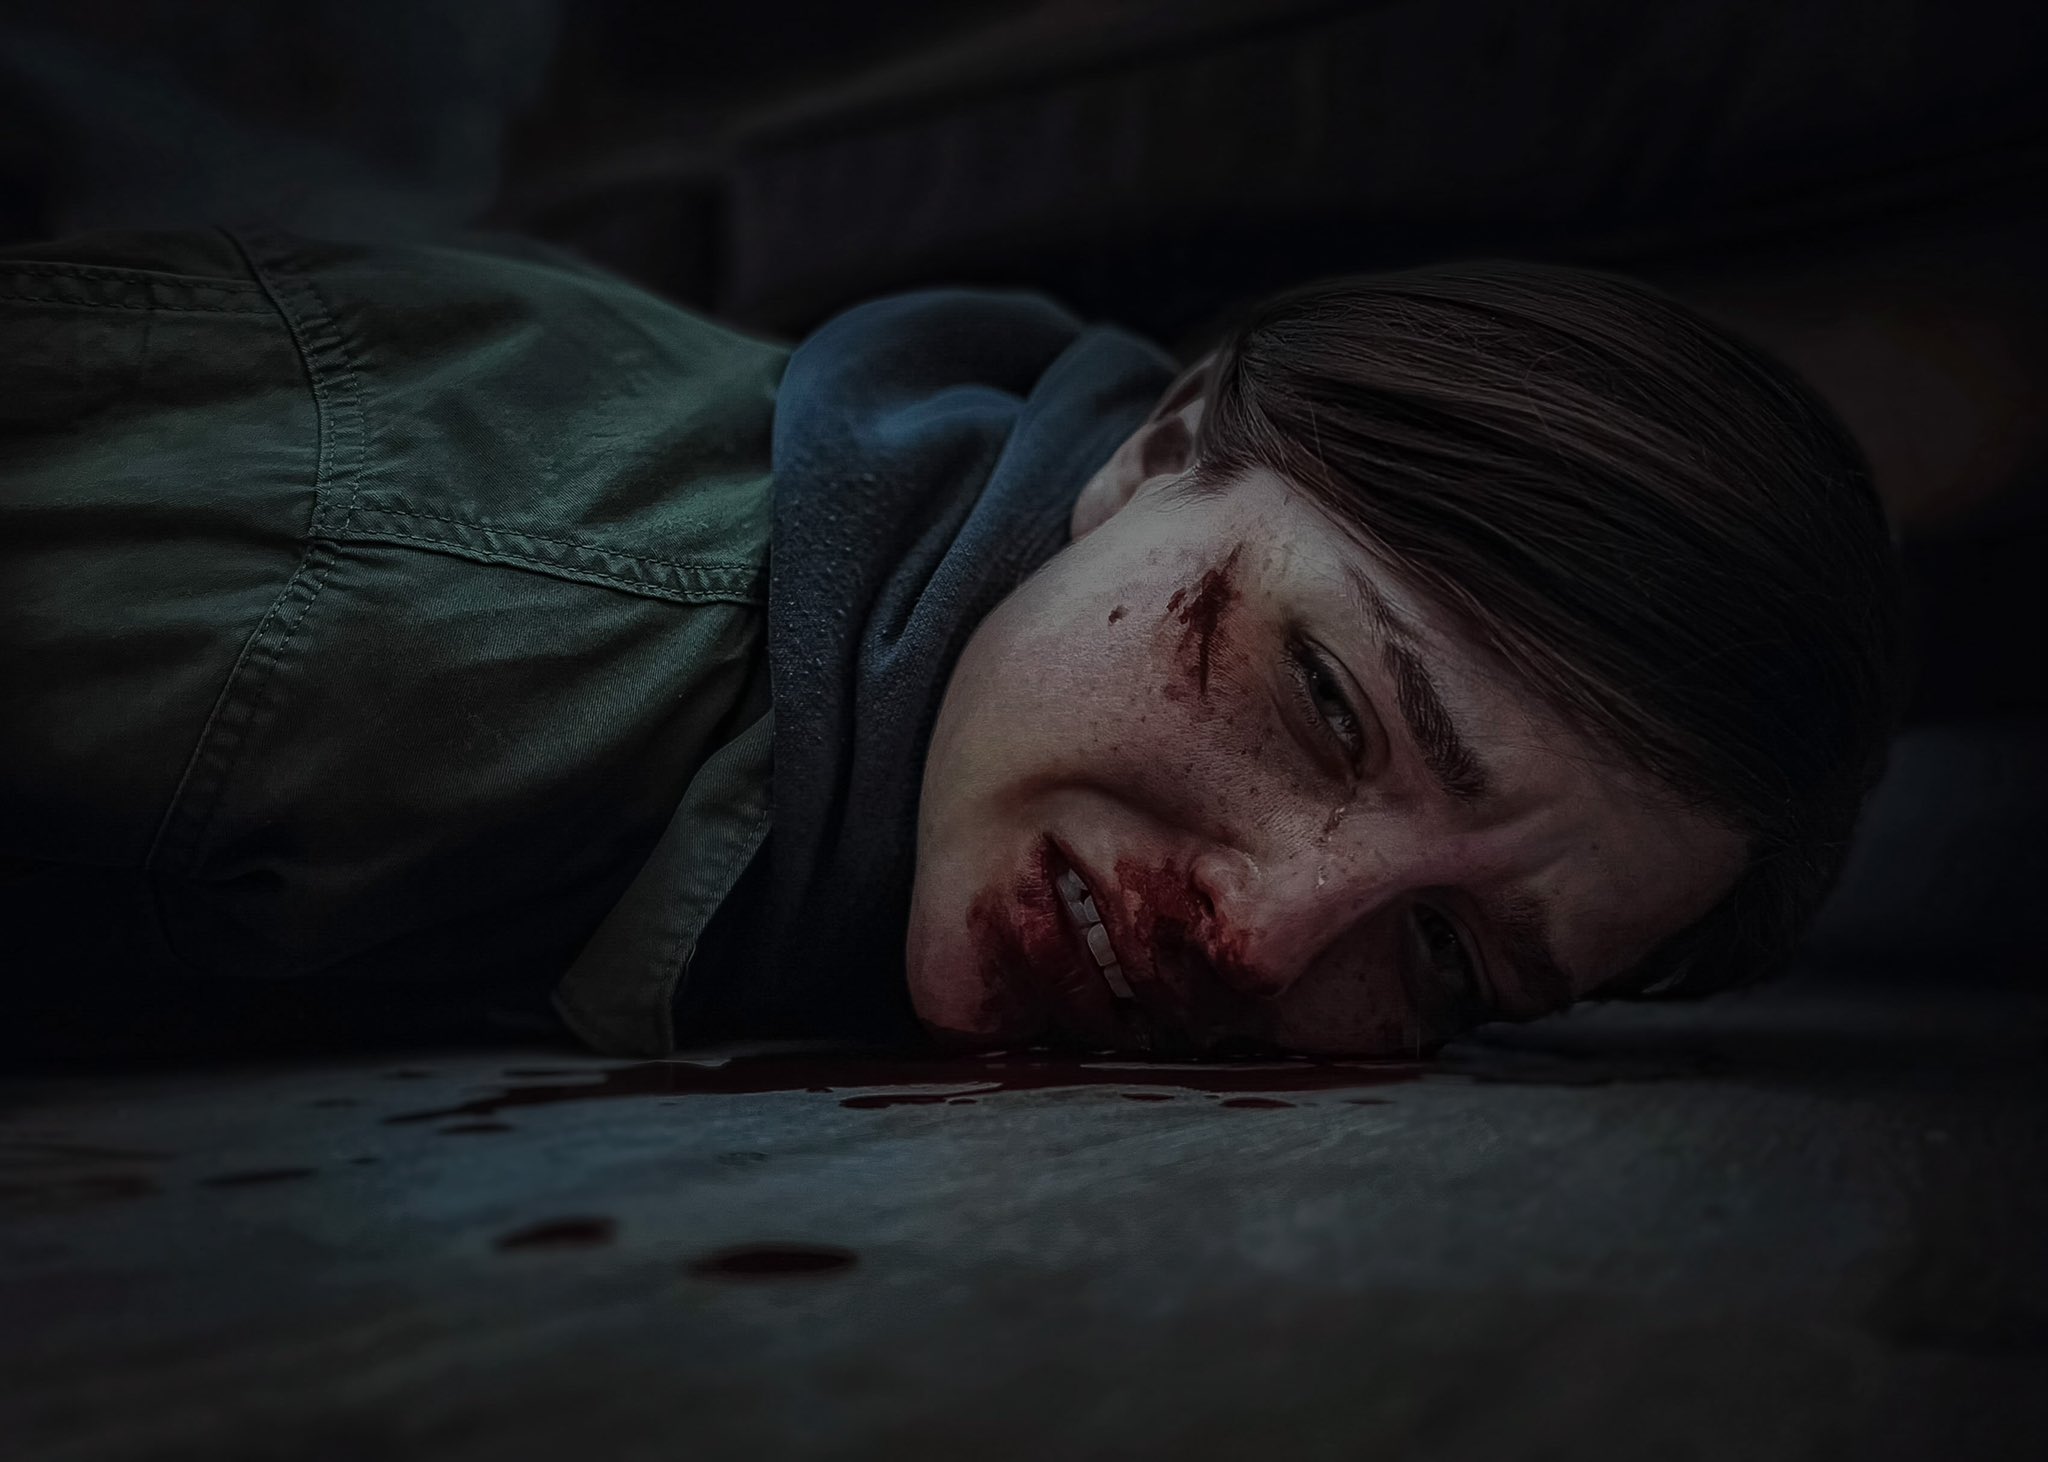 Косплей Элли похож на скриншот The Last of Us 2